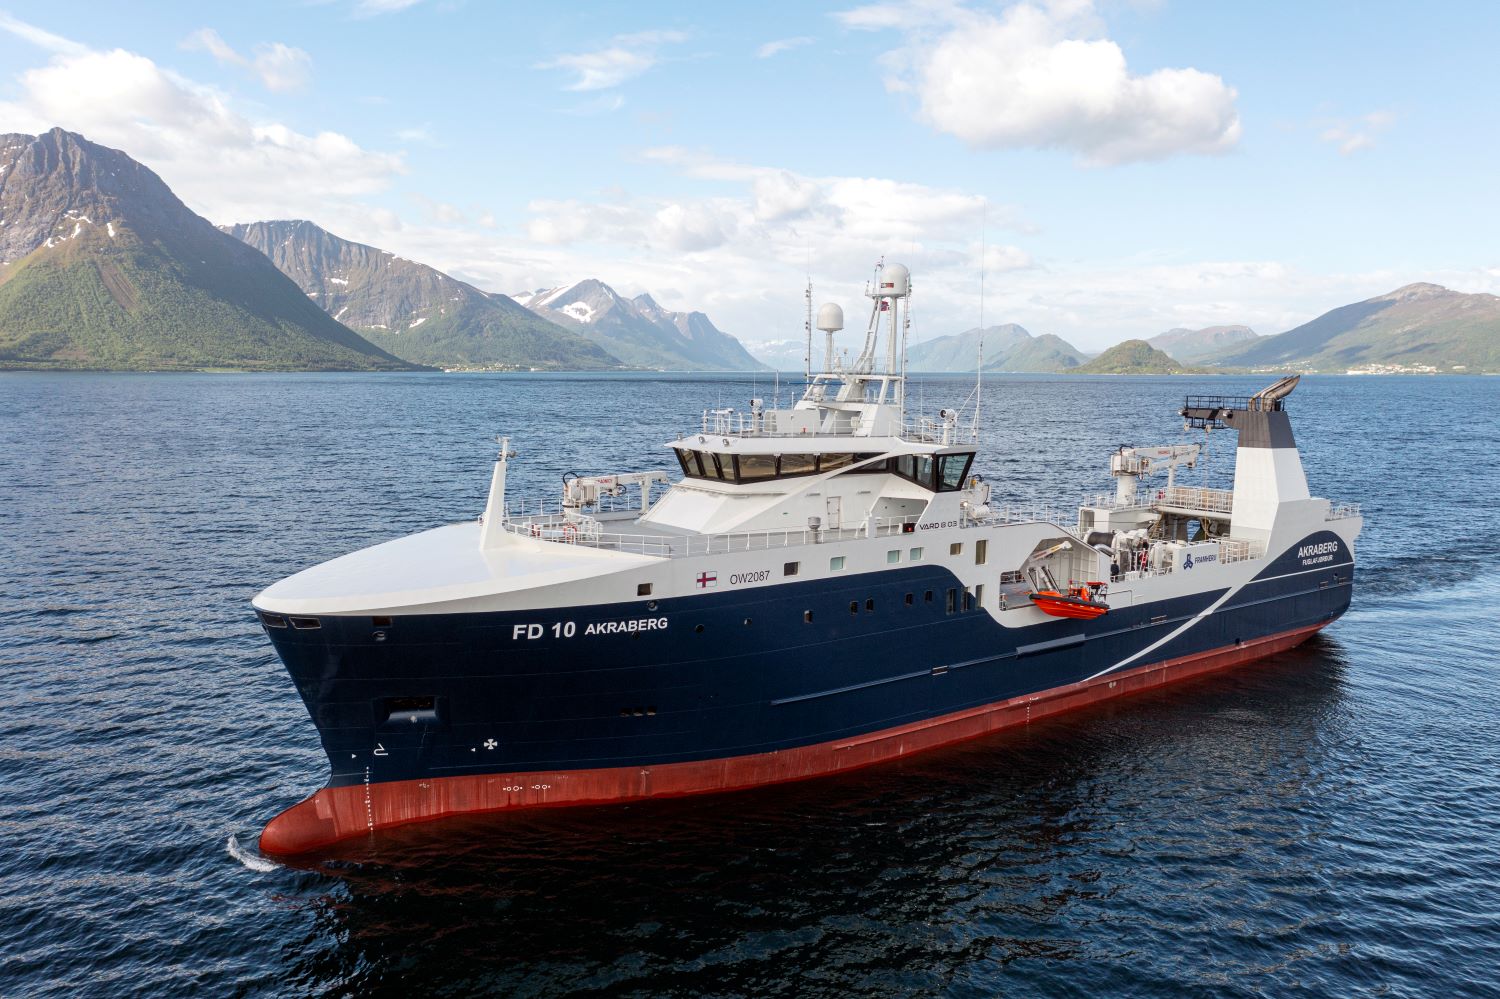 Ny frysetråler til Færøyene | Eksportfinansiering Norge